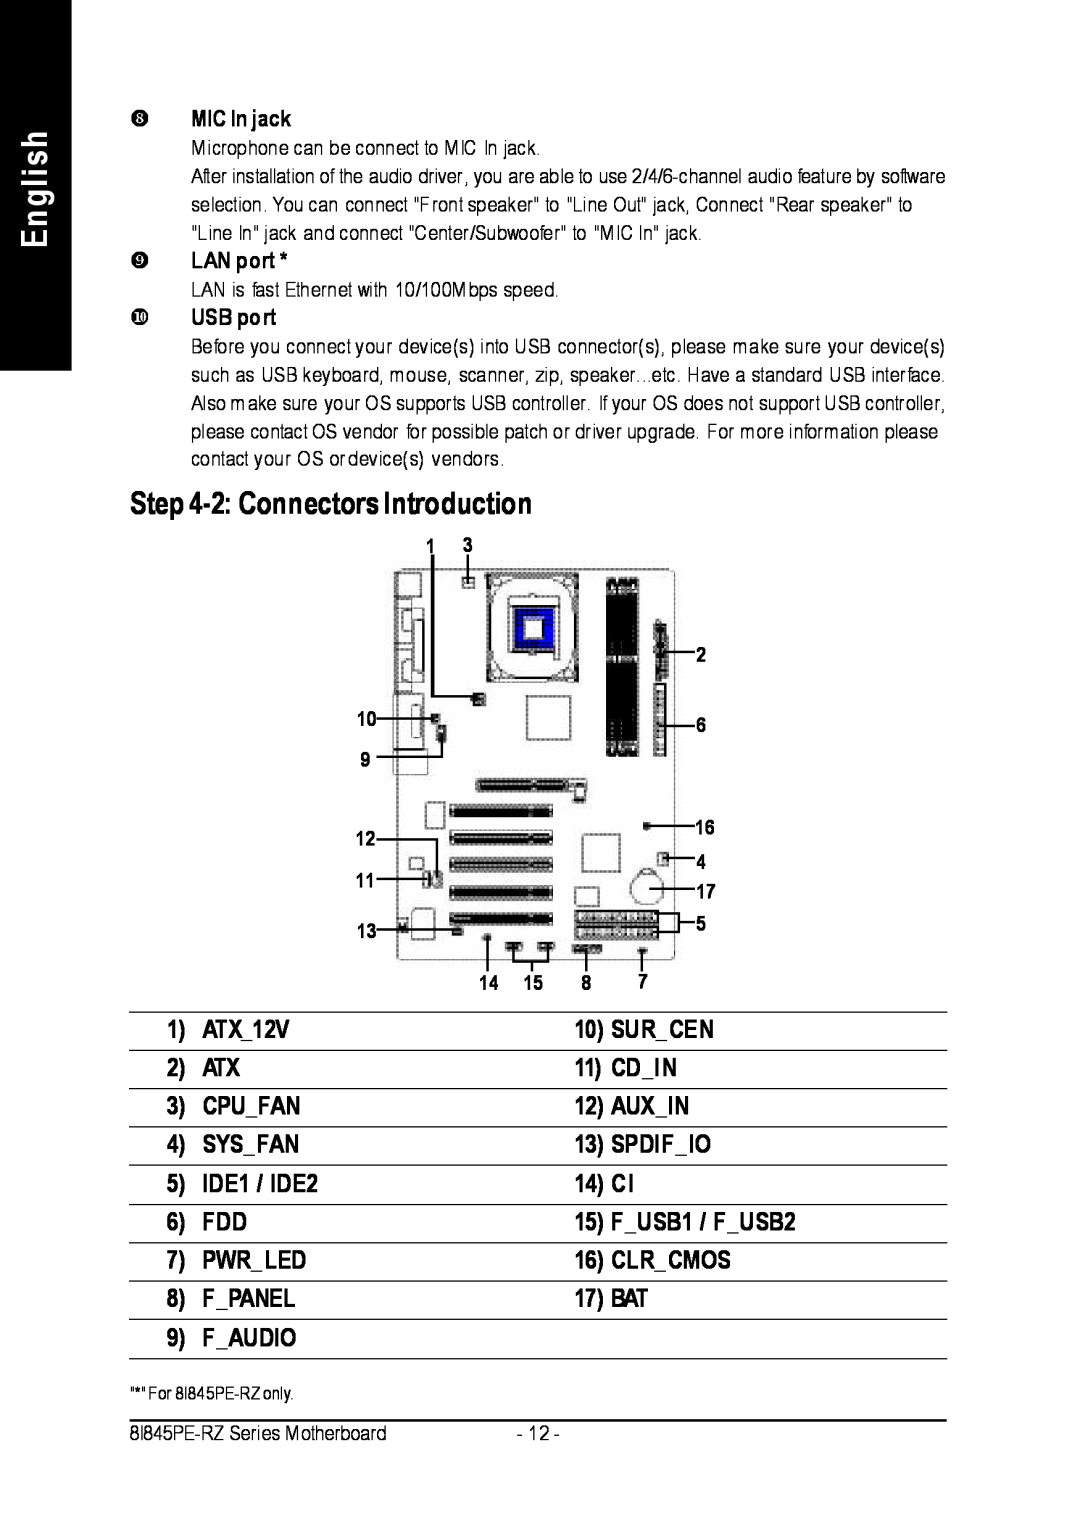 Intel 8I845PE-RZ-C user manual 2 Connectors Introduction, English 